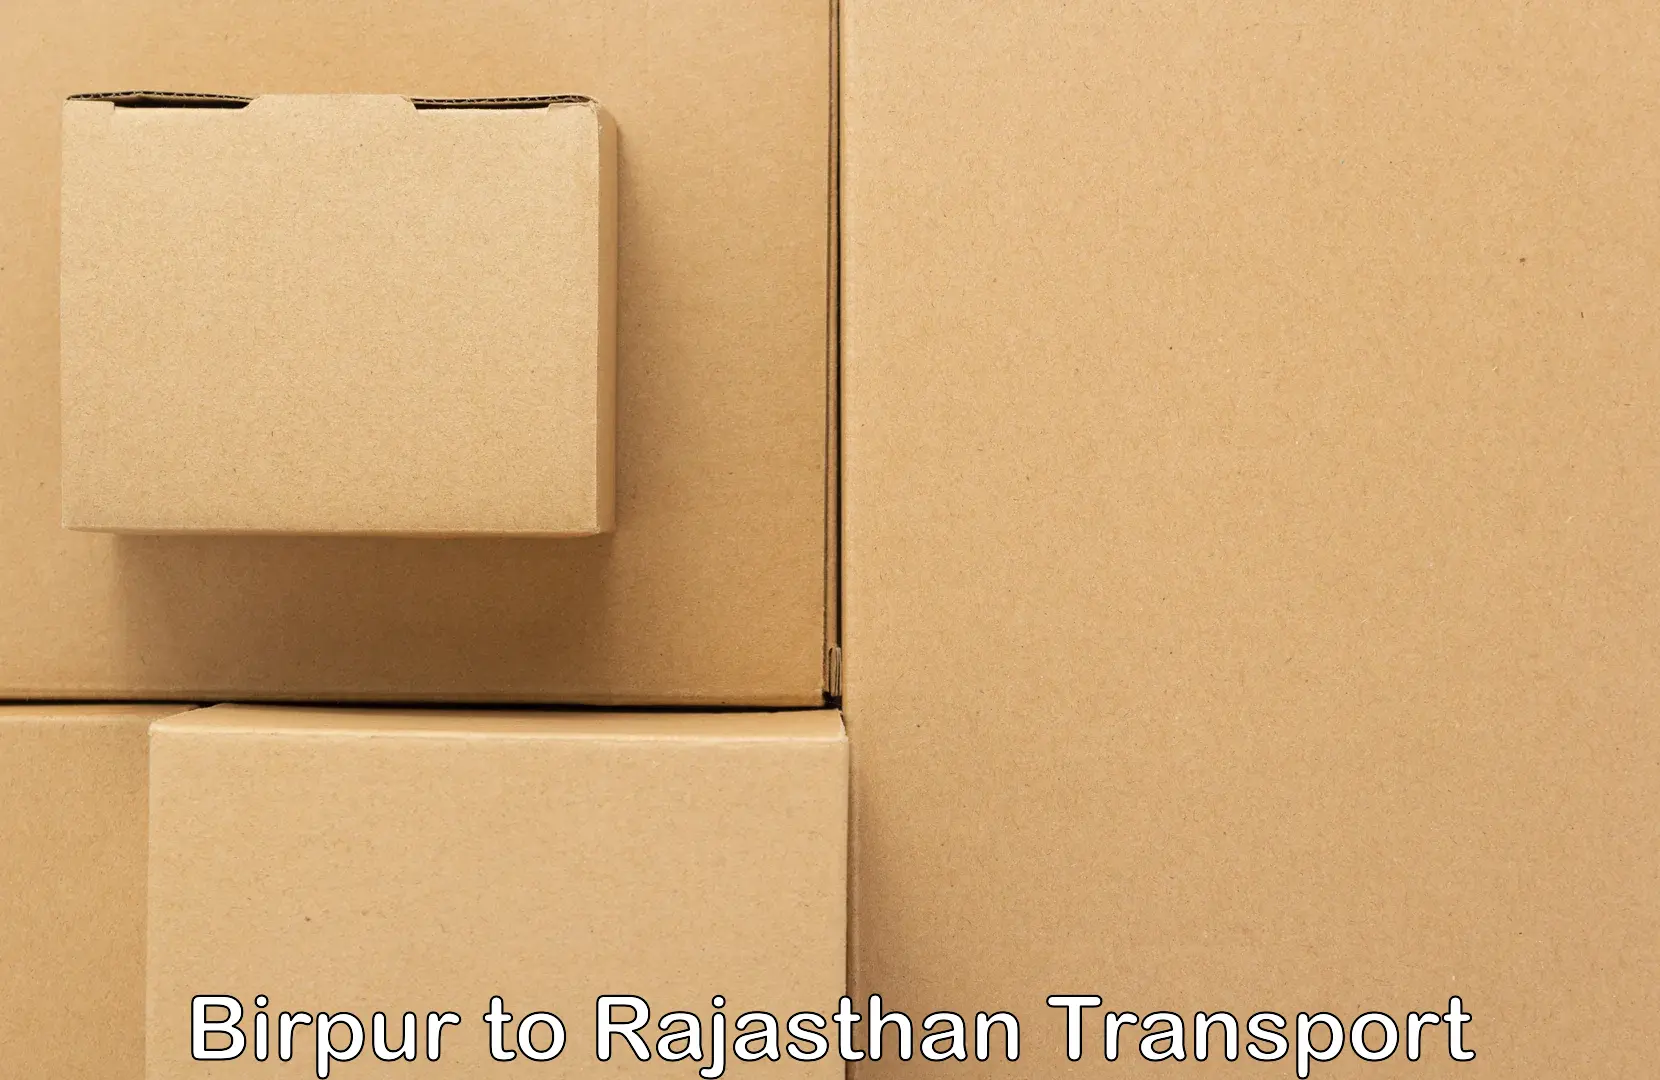 Truck transport companies in India Birpur to Fatehpur Sikar